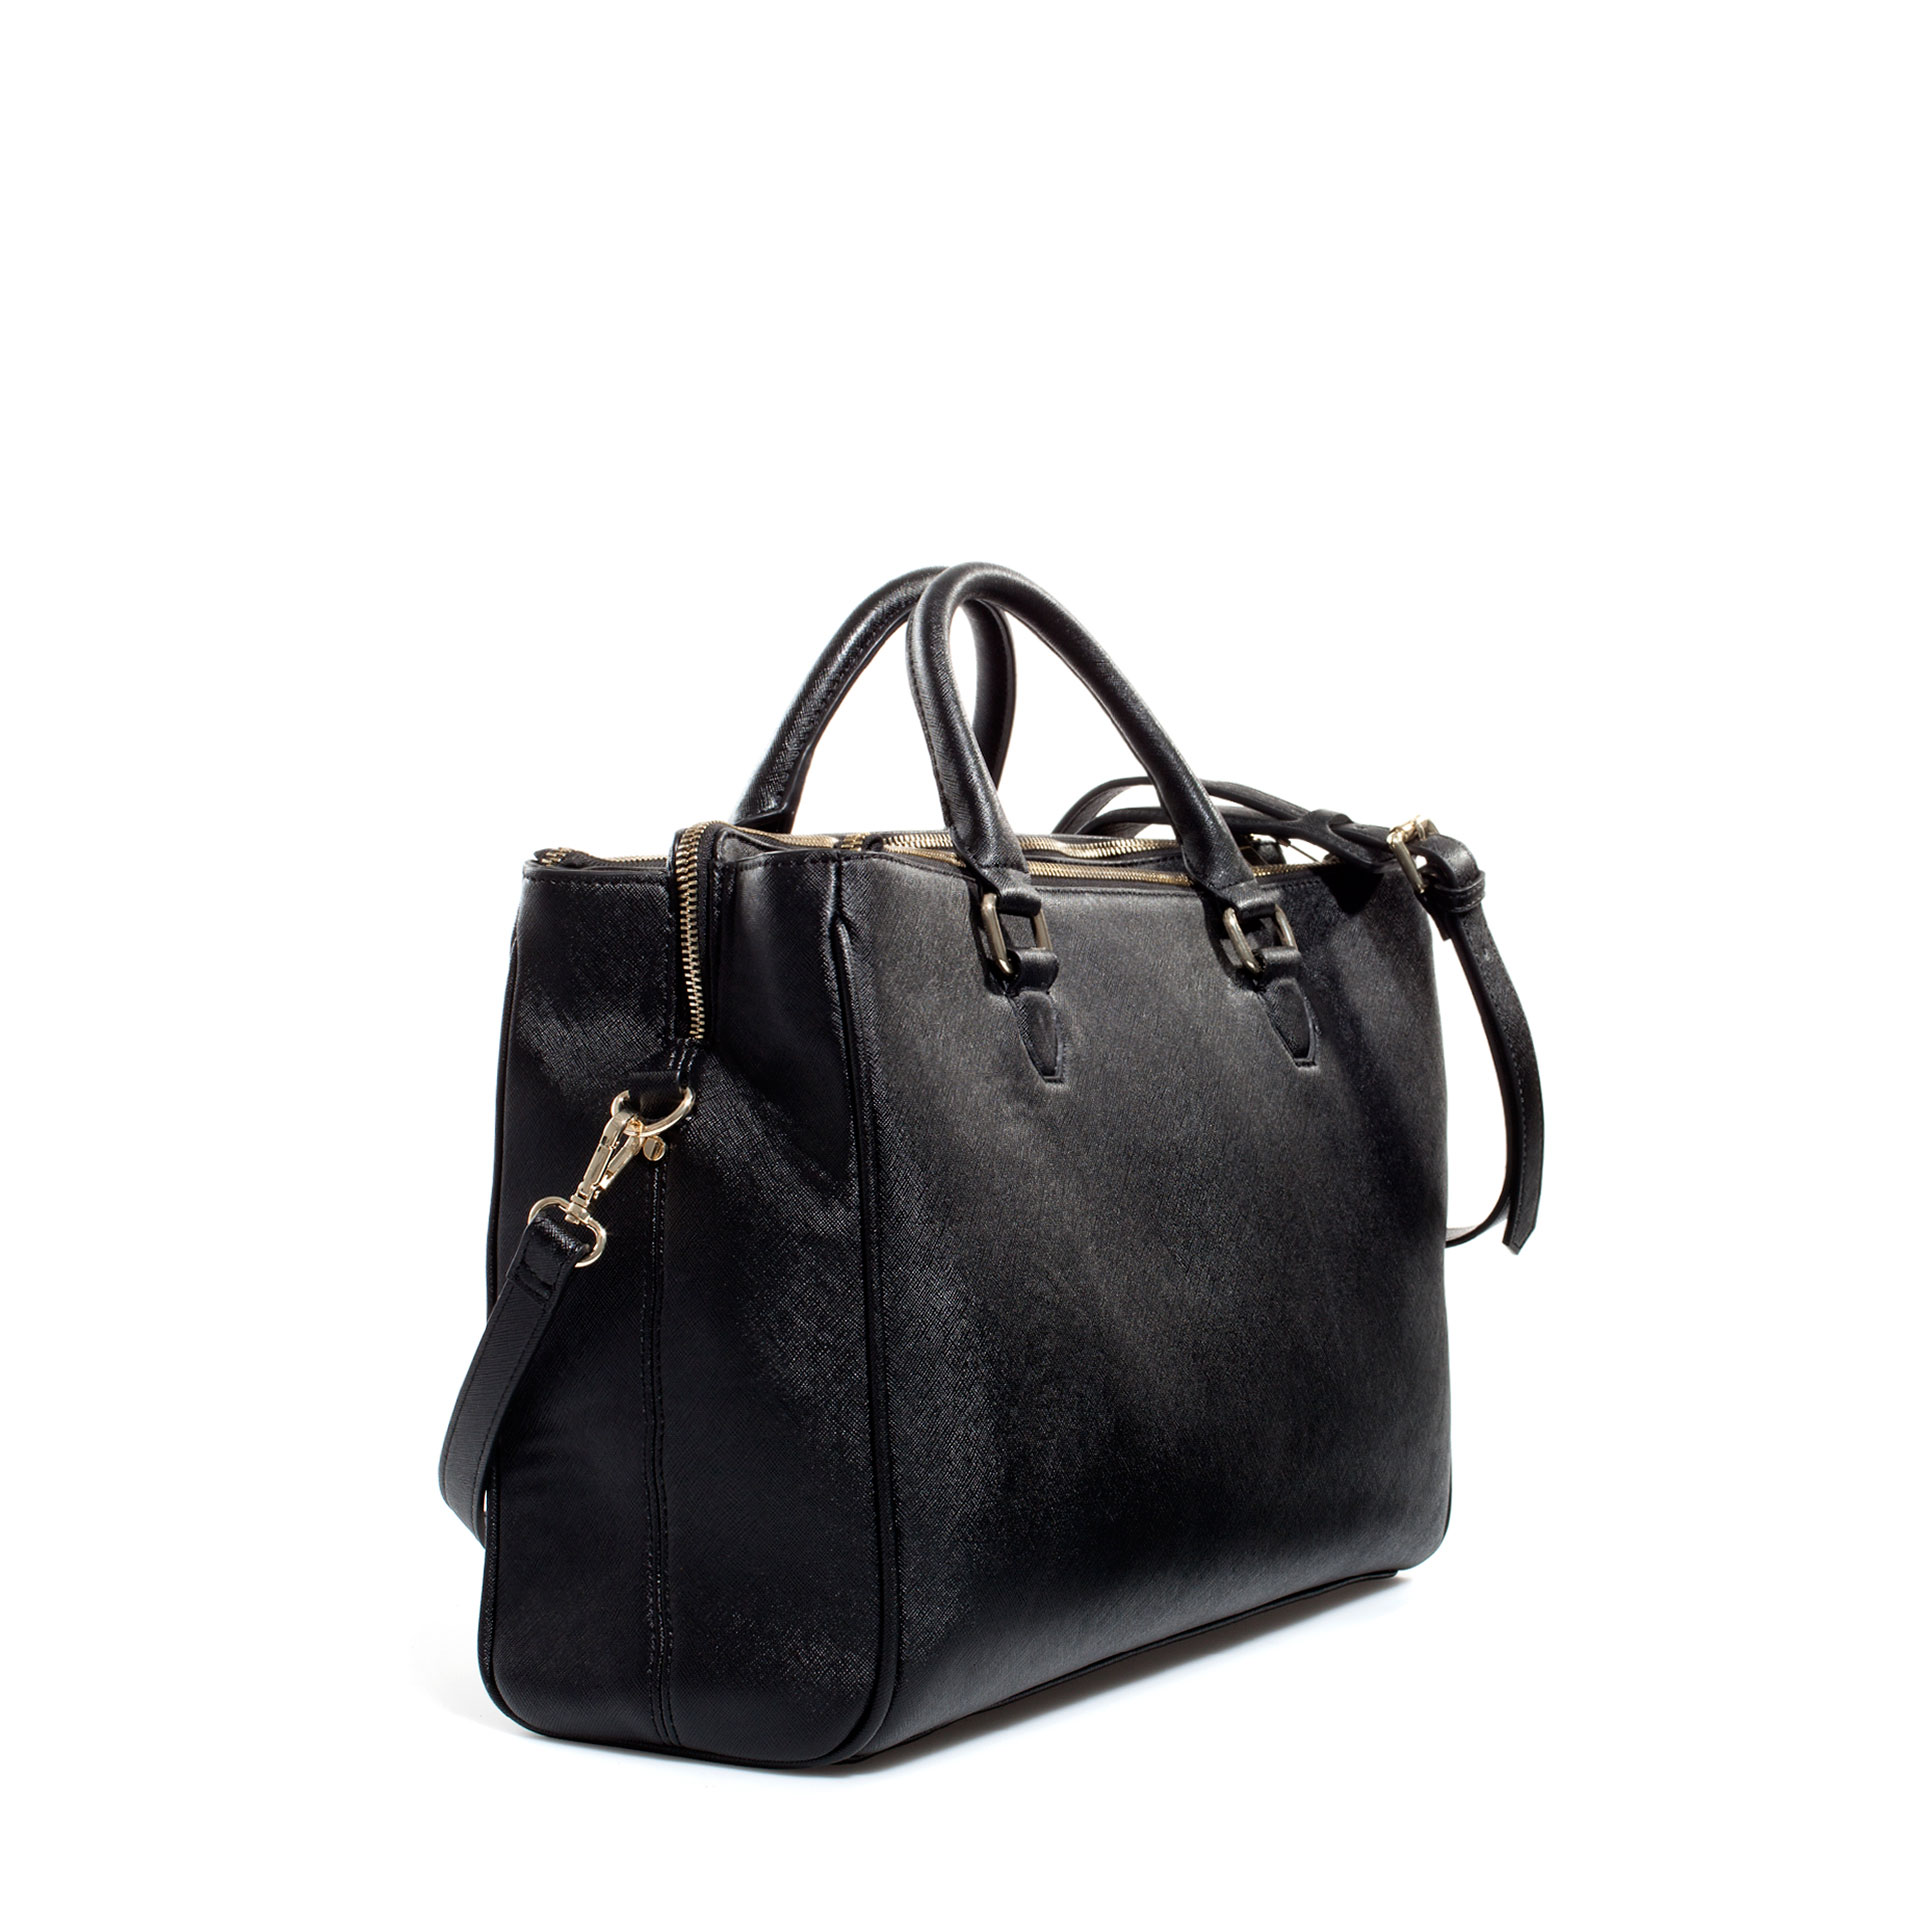 Handbags | Zara Office City Bag | keetkeets